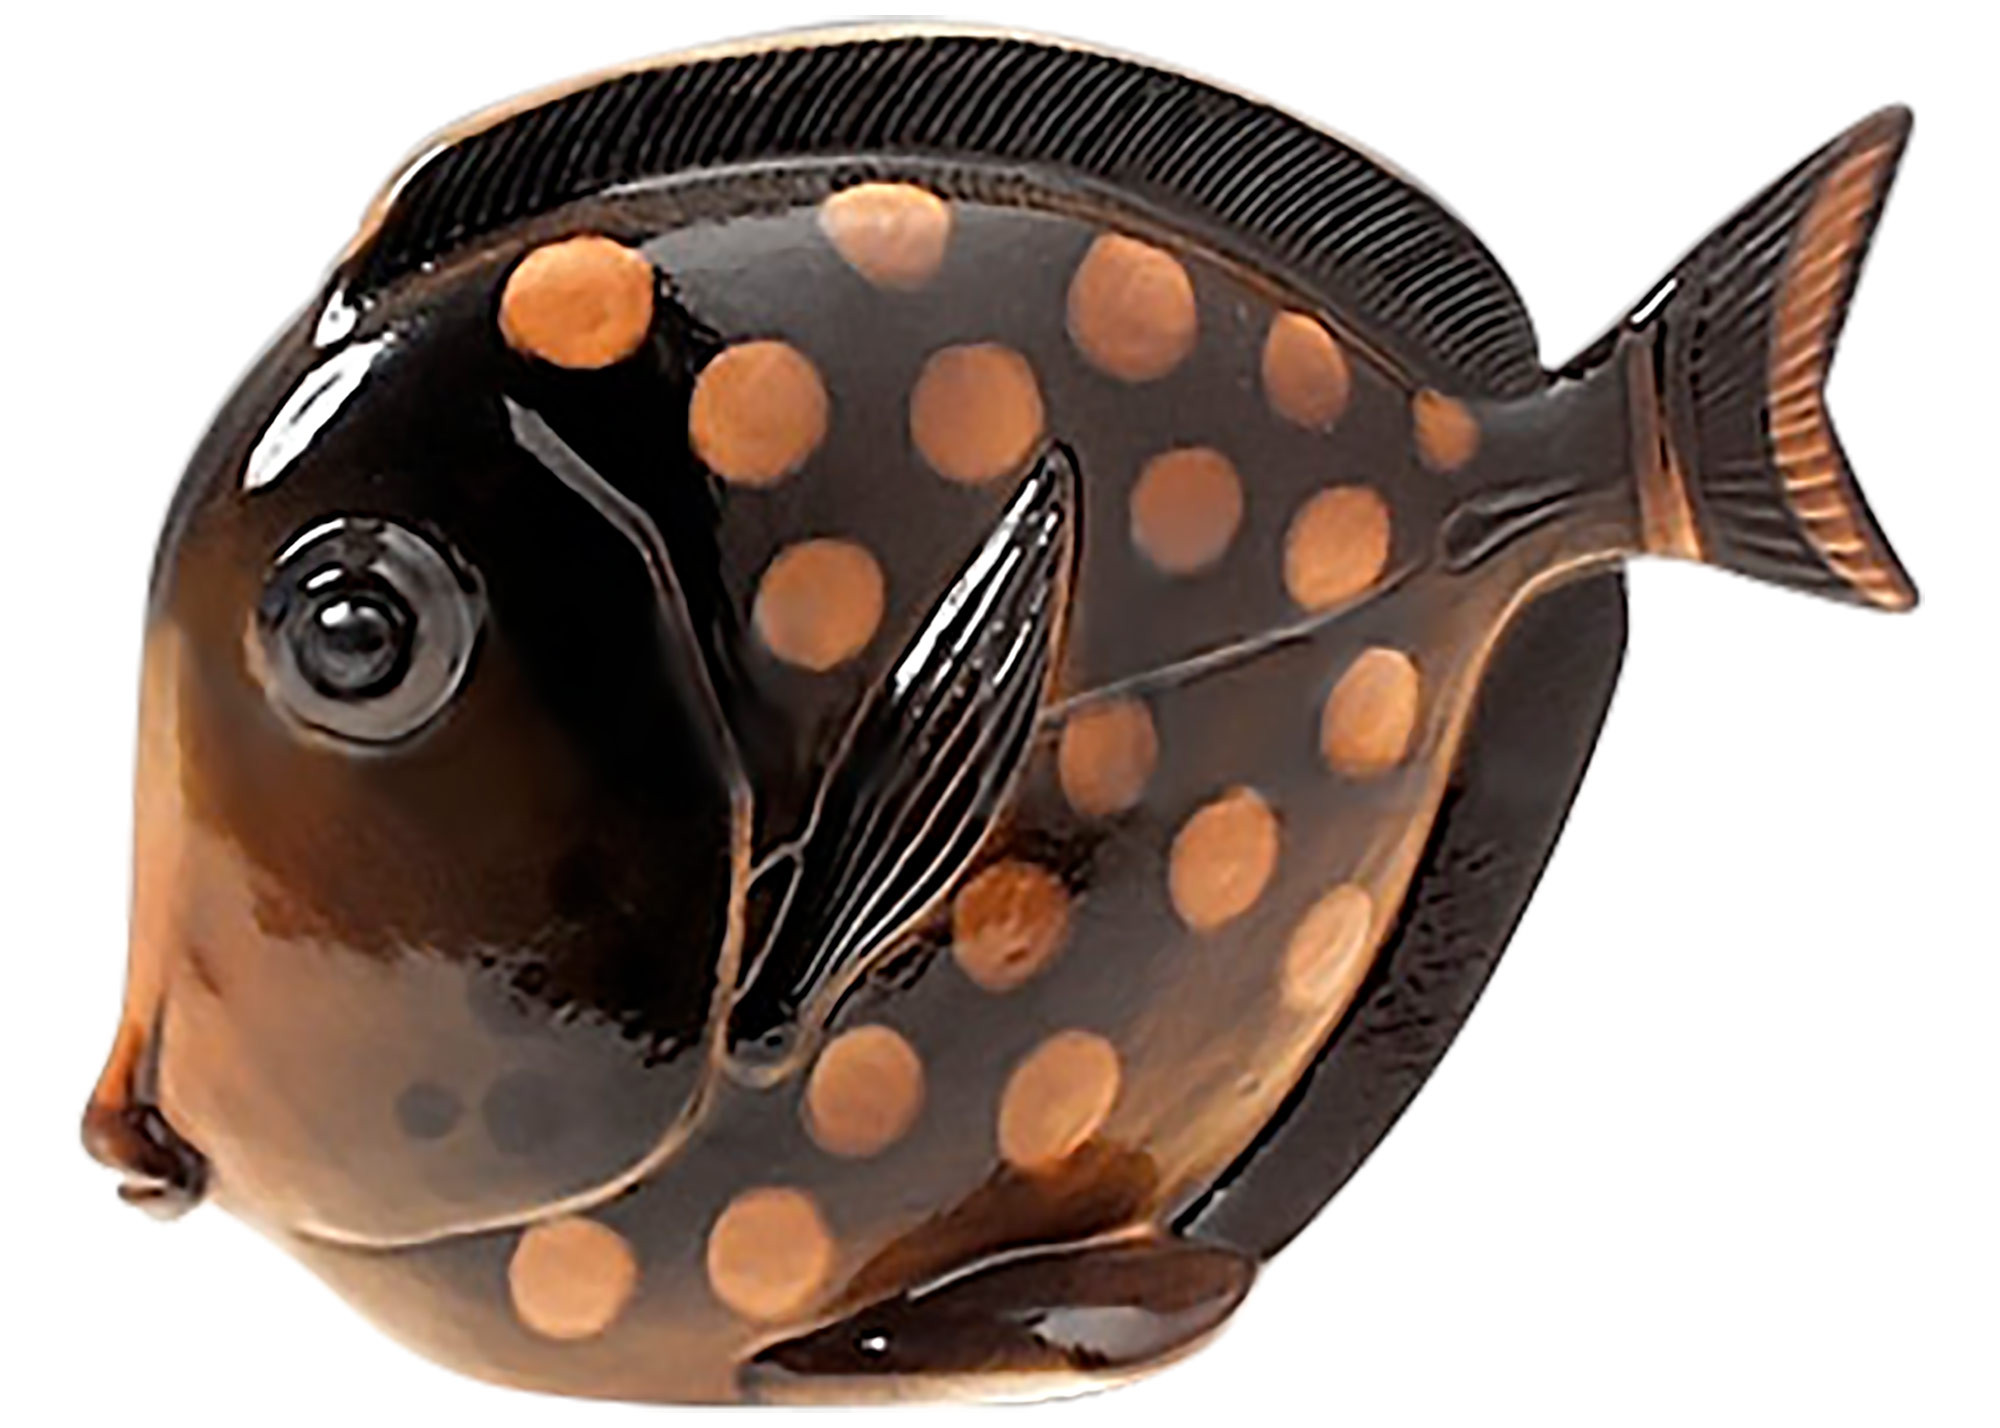 Medium-Sized Fish Figurine